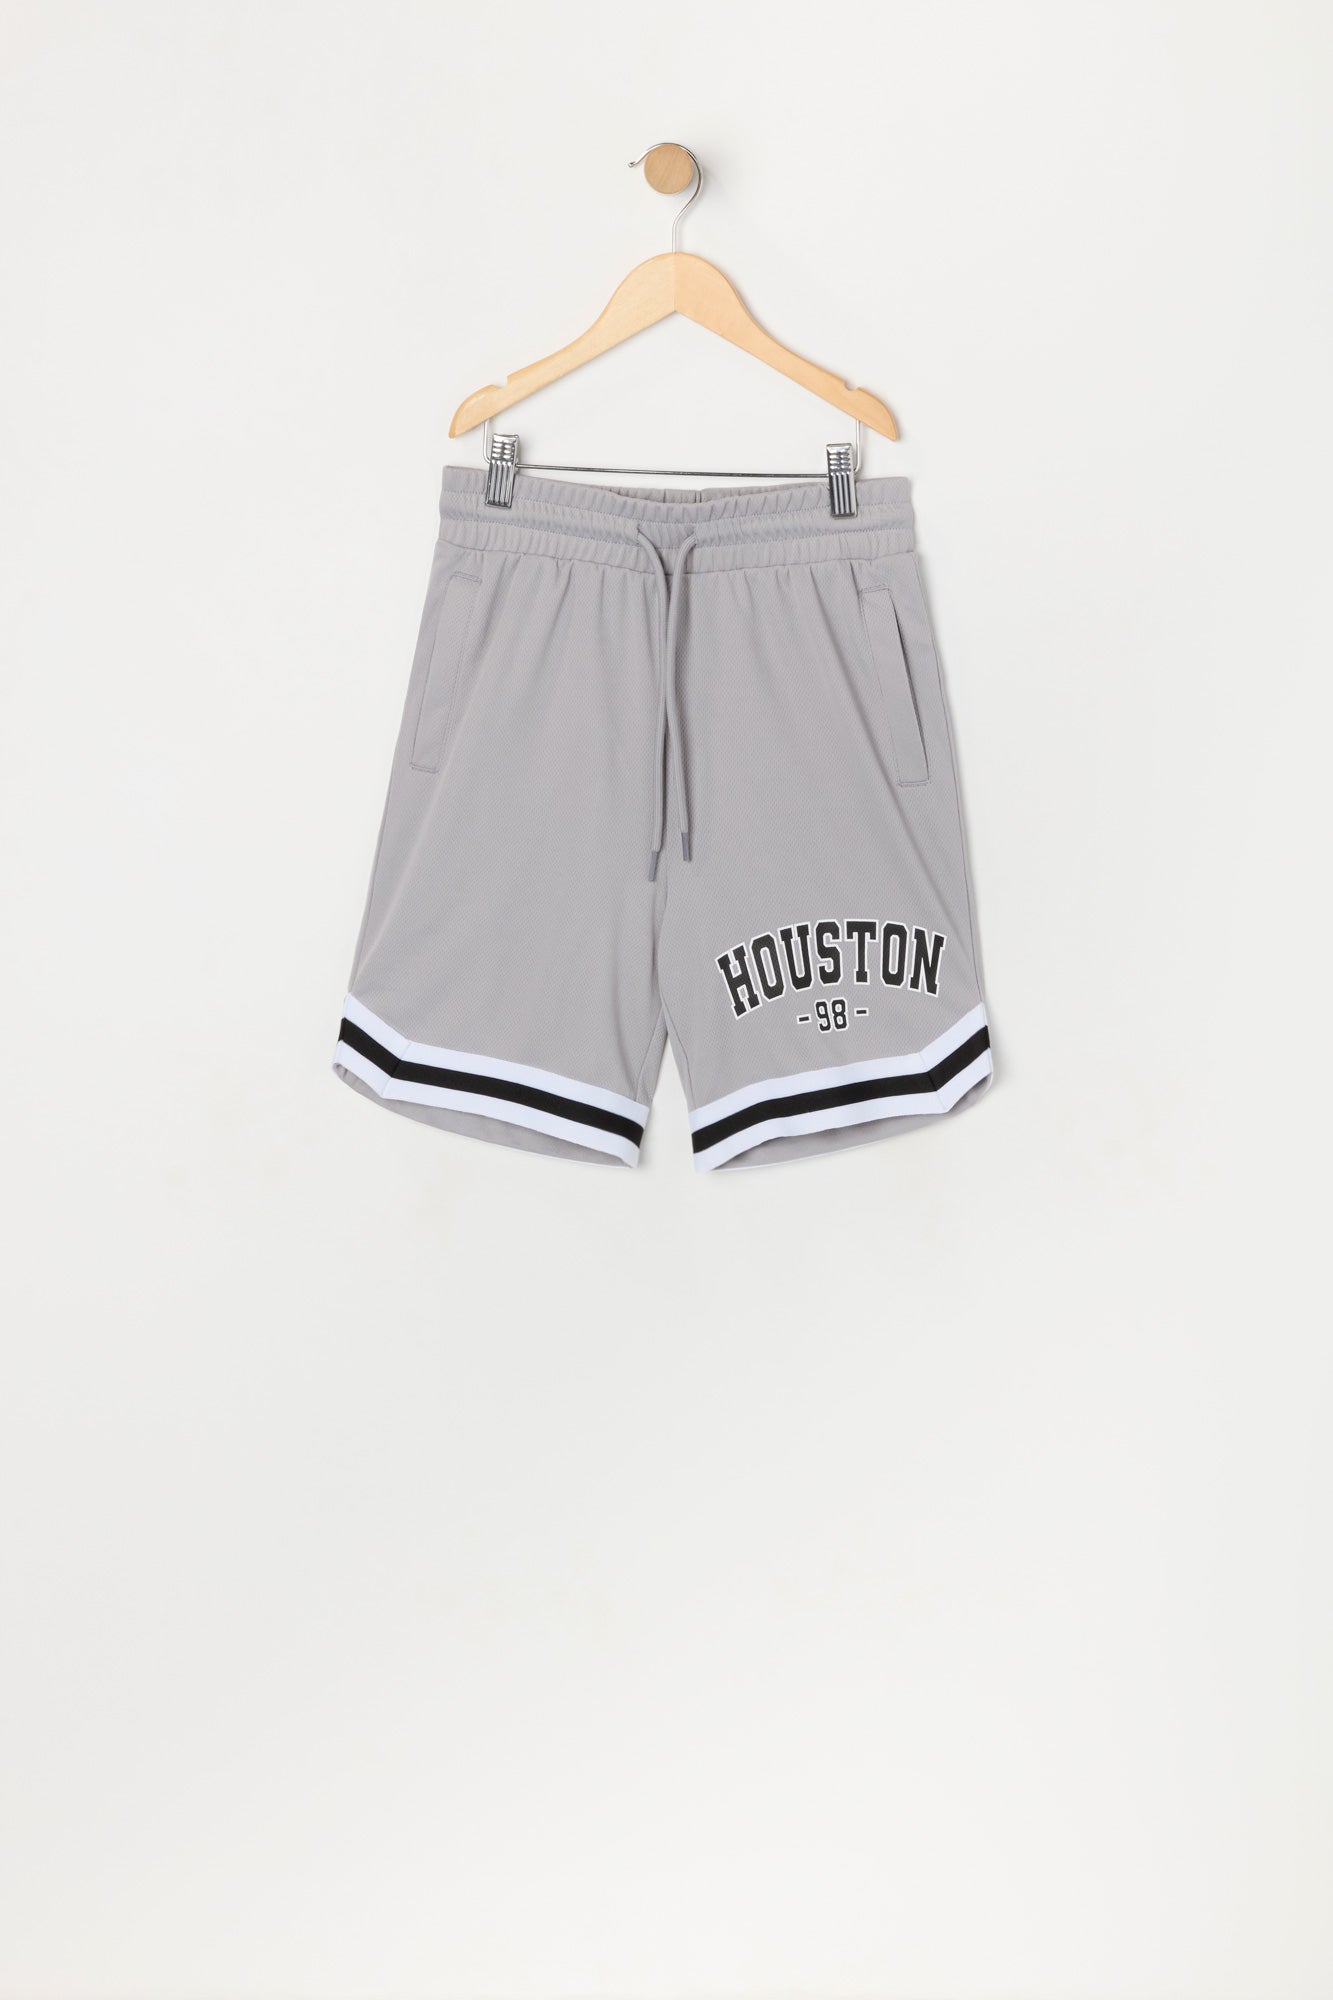 Boys Houston Mesh Basketball Short